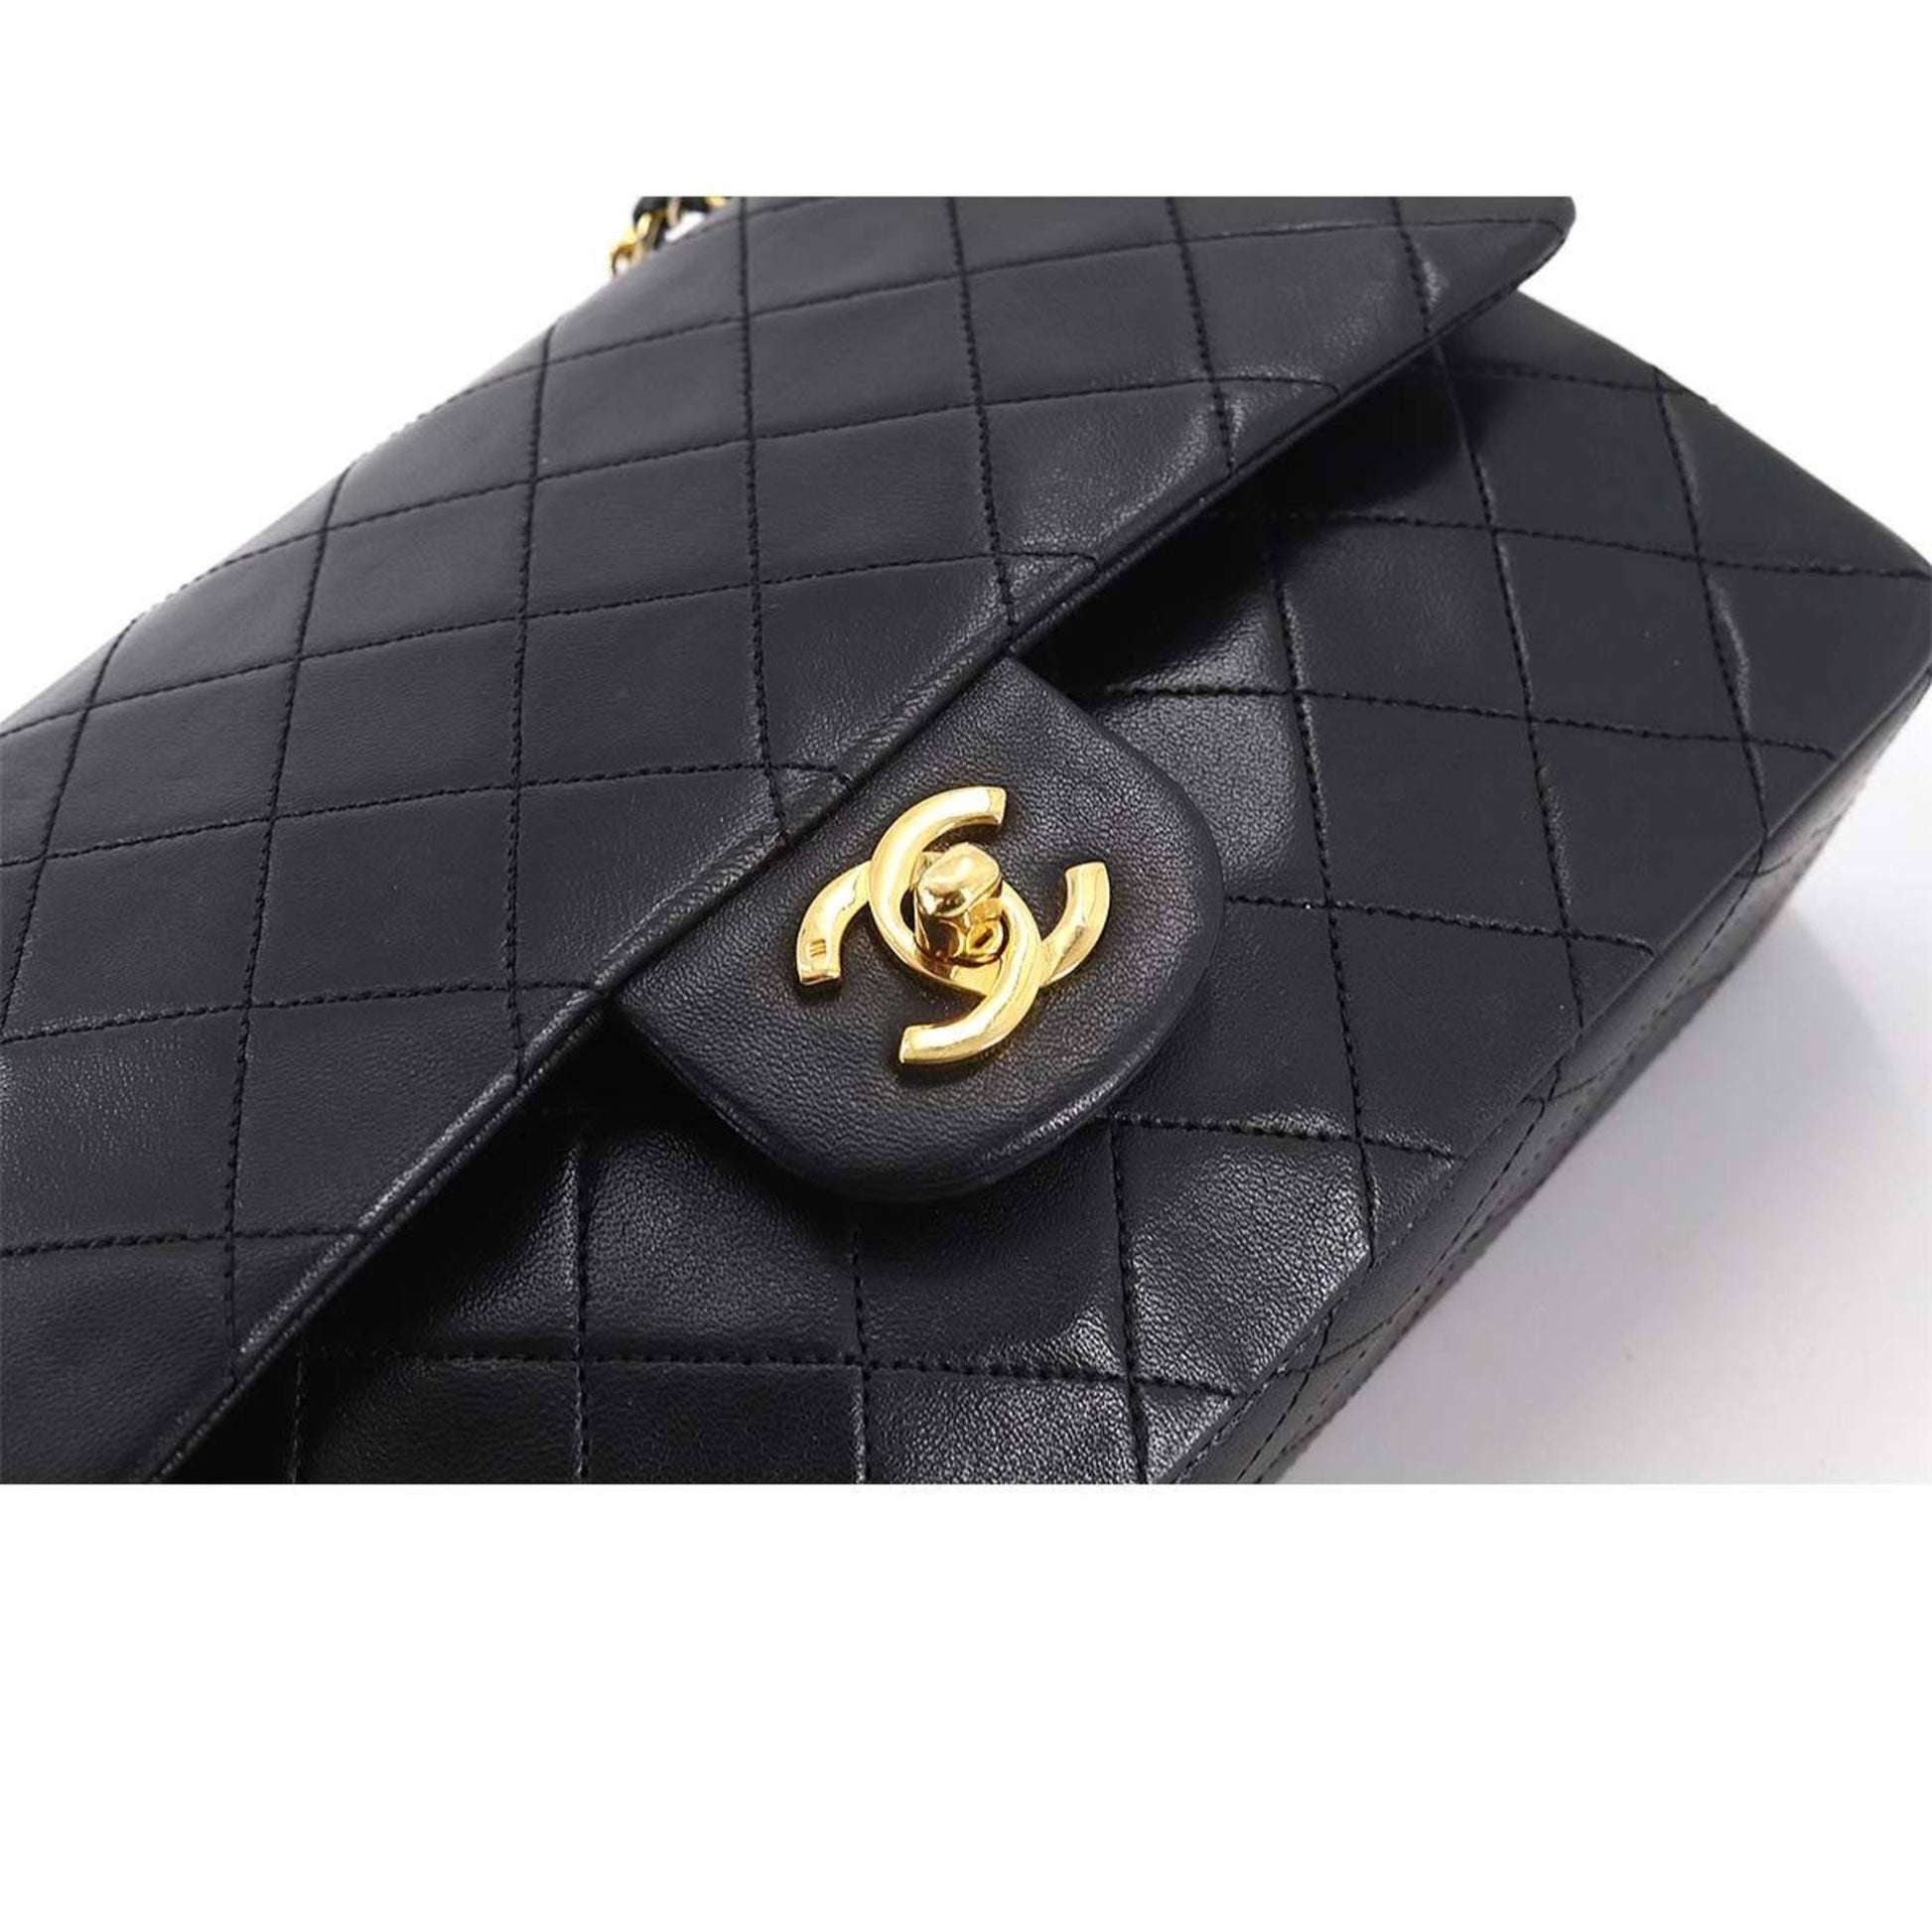 Chanel matelasse 25 chain shoulder bag leather black A01112 gold metal